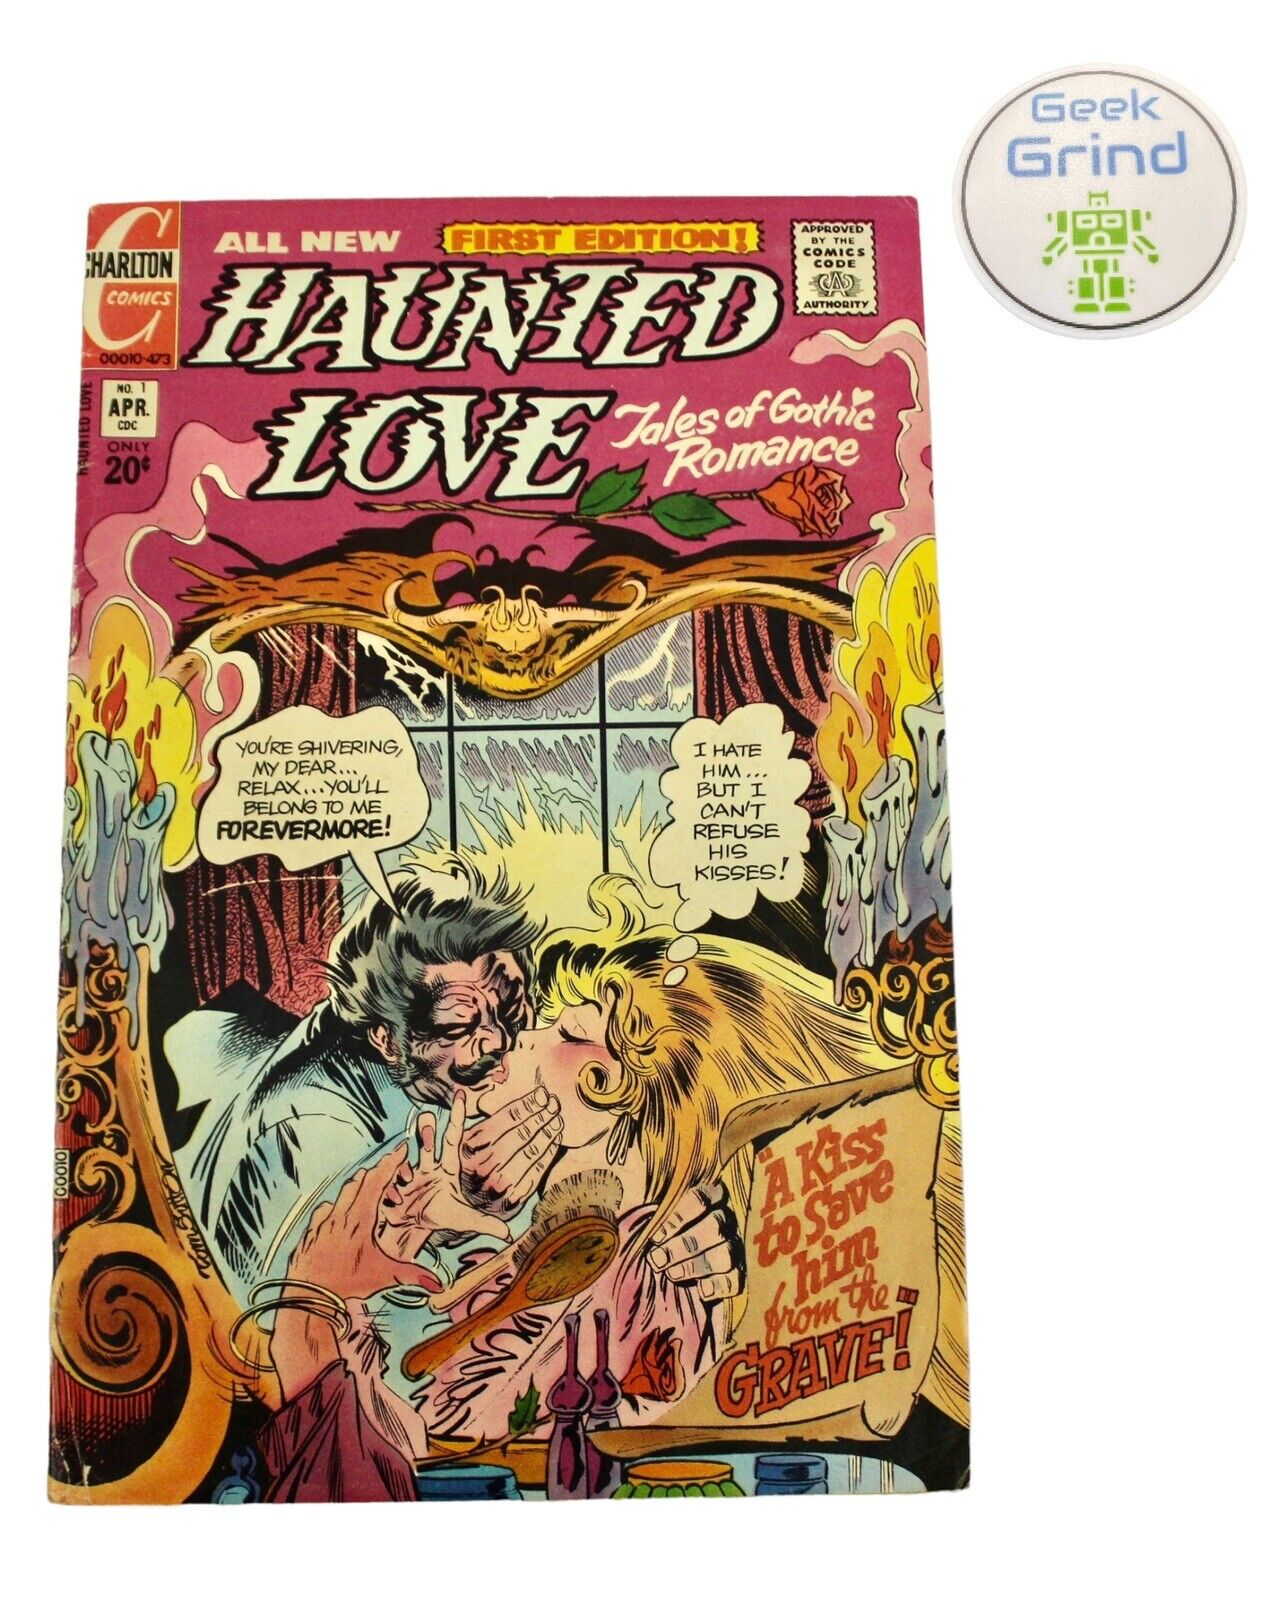 HAUNTED LOVE #1 CHARLTON GOTHIC ROMANCE HORROR TOM SUTTON COVER ART *1973*